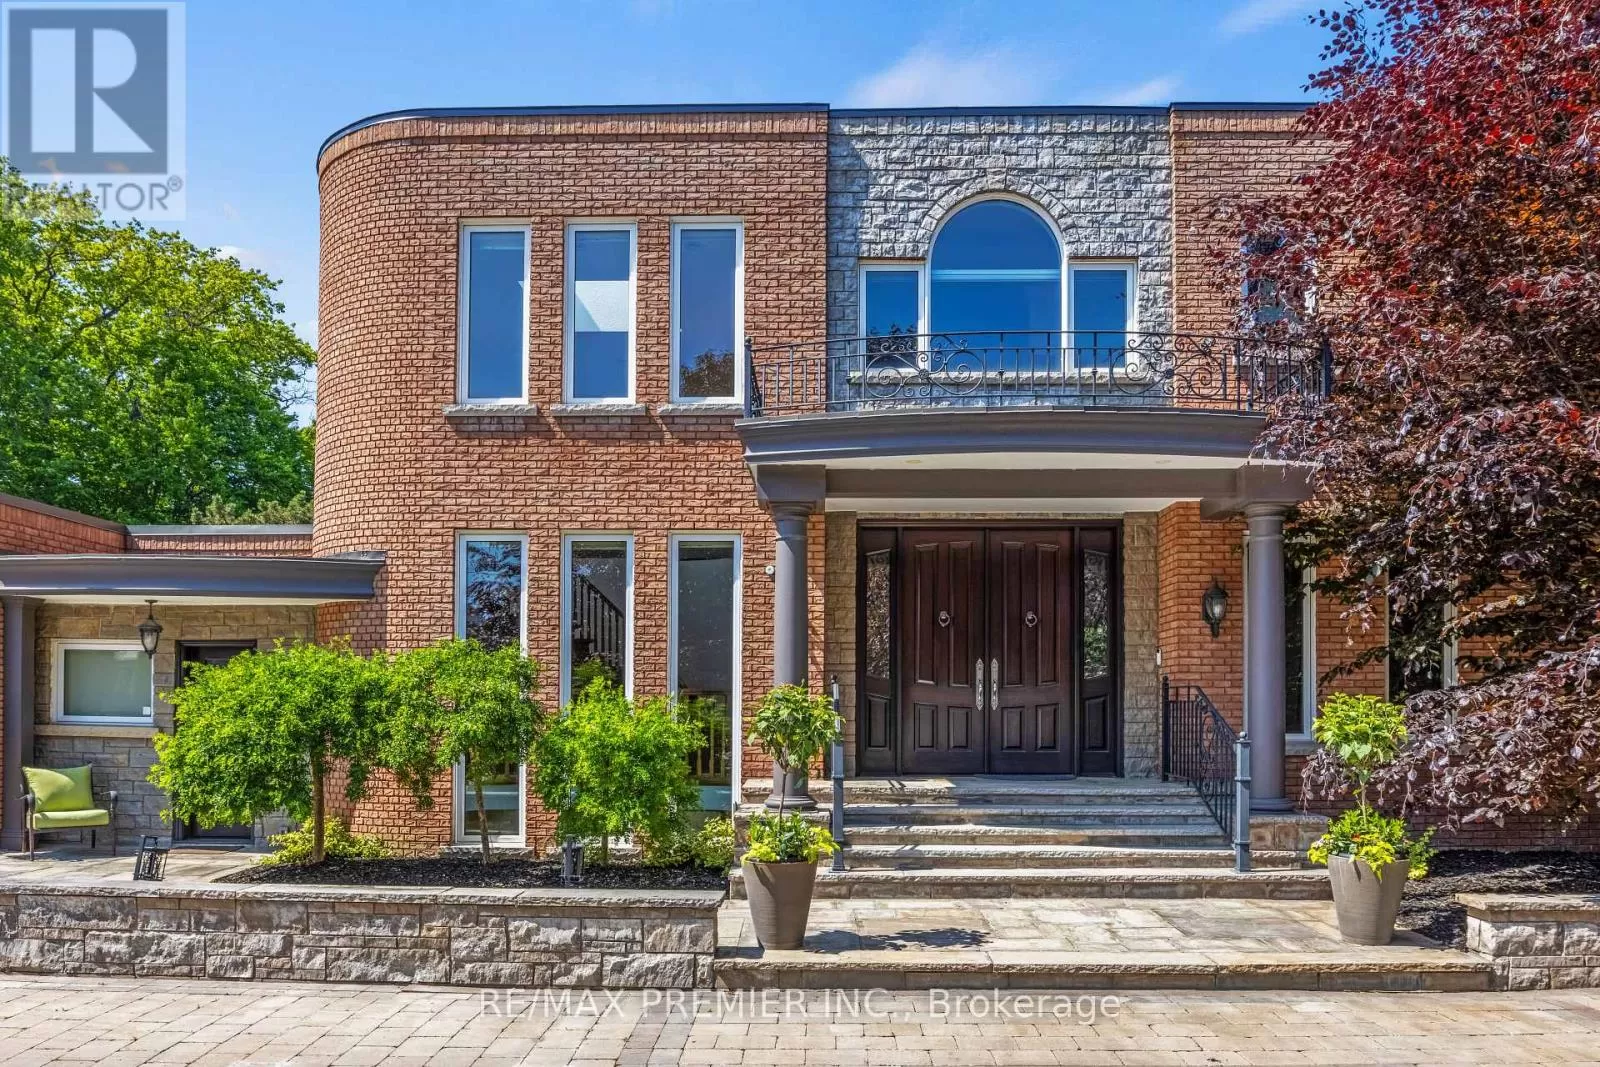 House for rent: 12 Westmount Park Road, Toronto, Ontario M9P 1R5